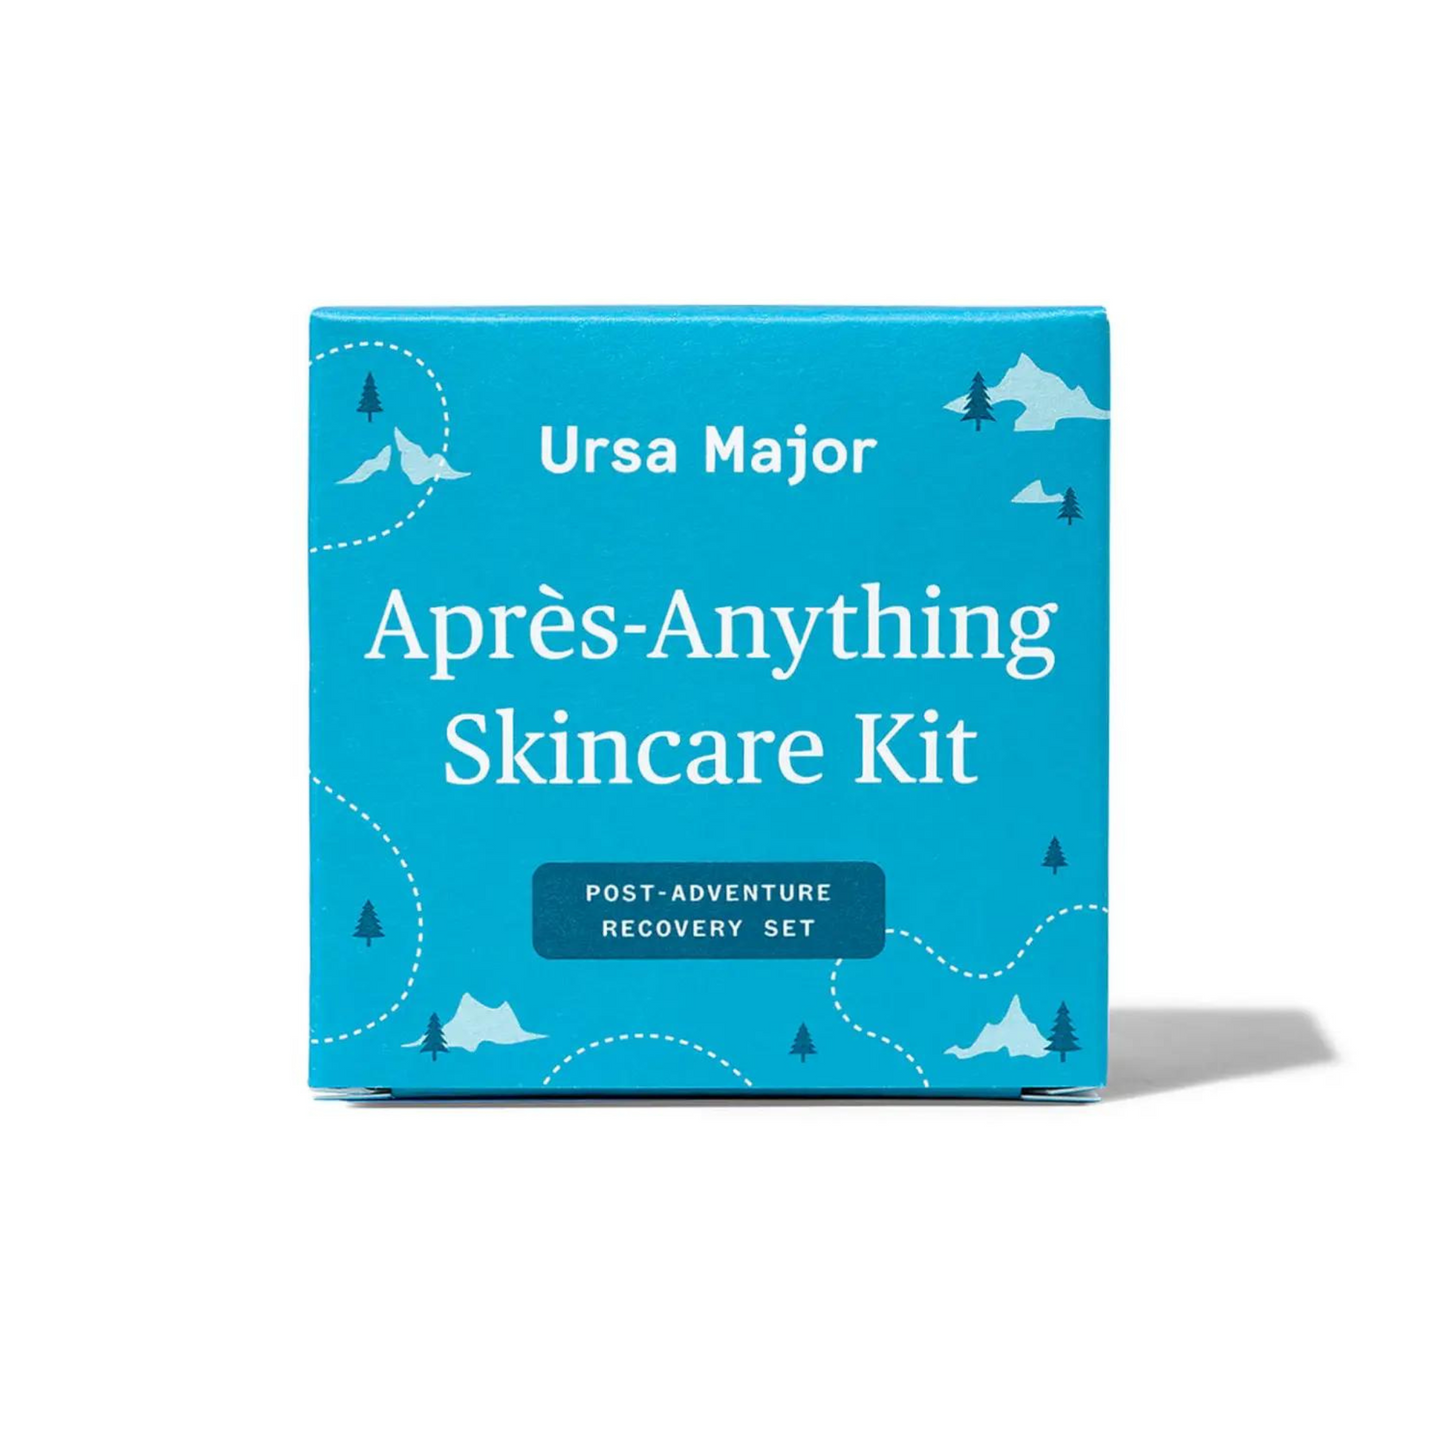 Primary Image of Ursa Major Limited Edition Apres Anything Skincare Kit